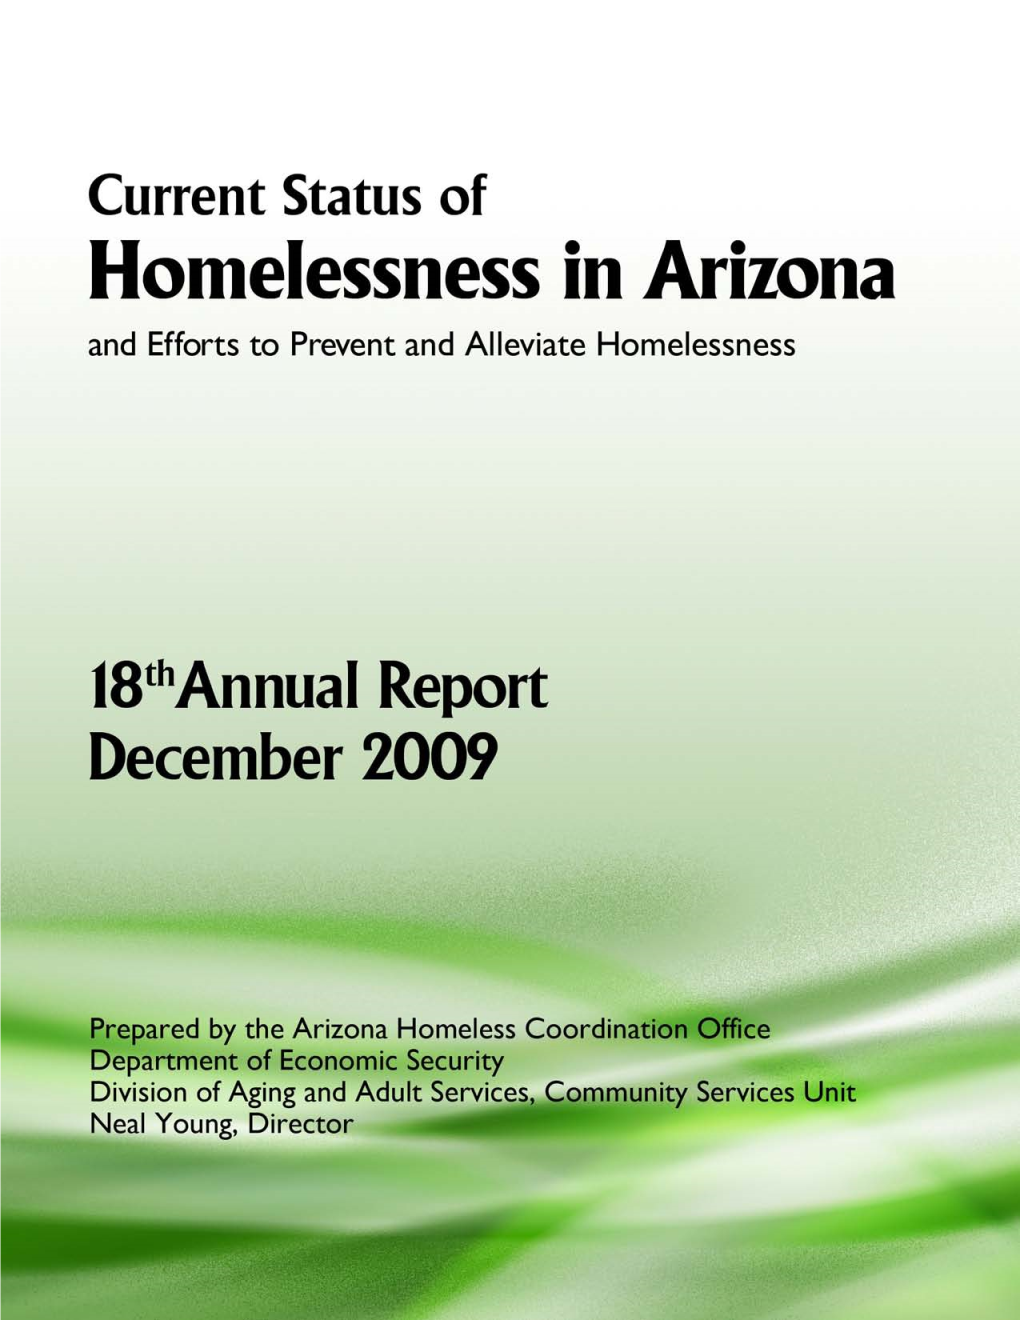 Current Status of Homelessness in Arizona 2009